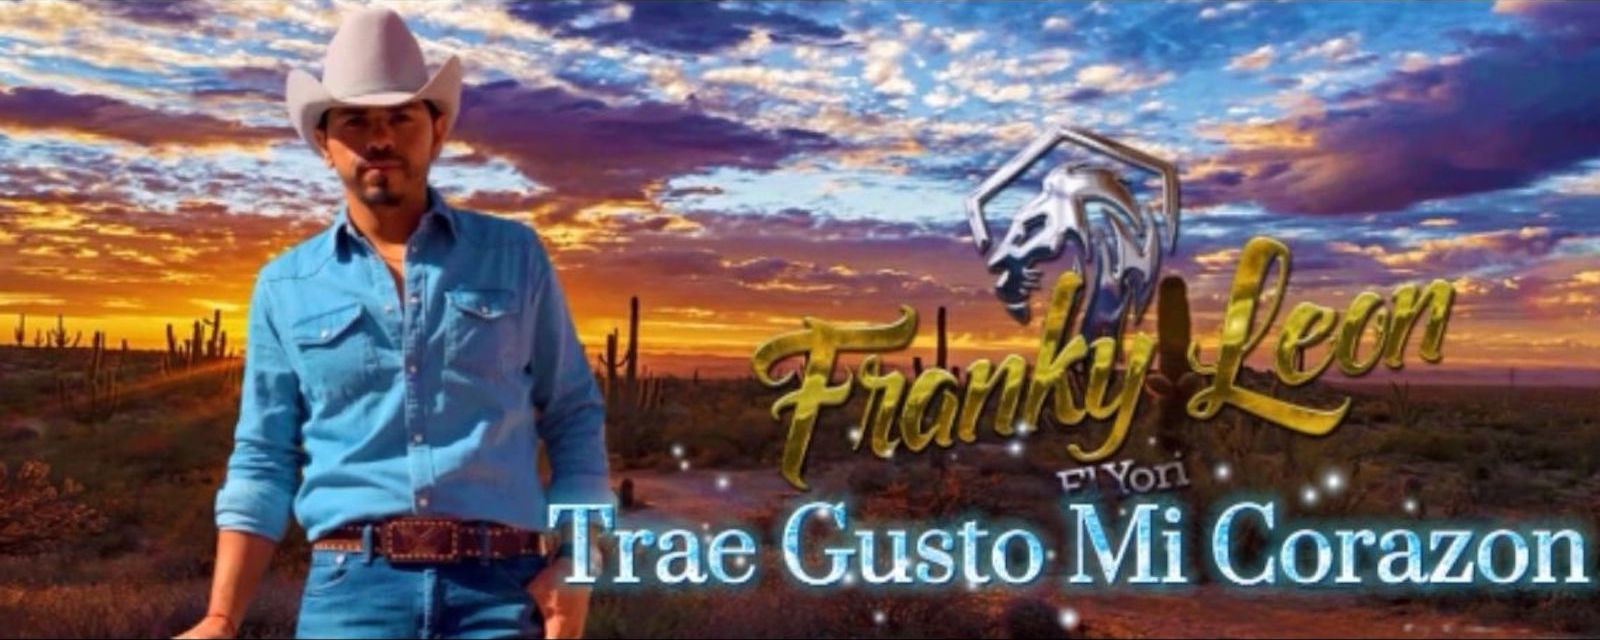 Franky Leon – El Yori “Trae Gusto Mi Corazón” – Two Power Music